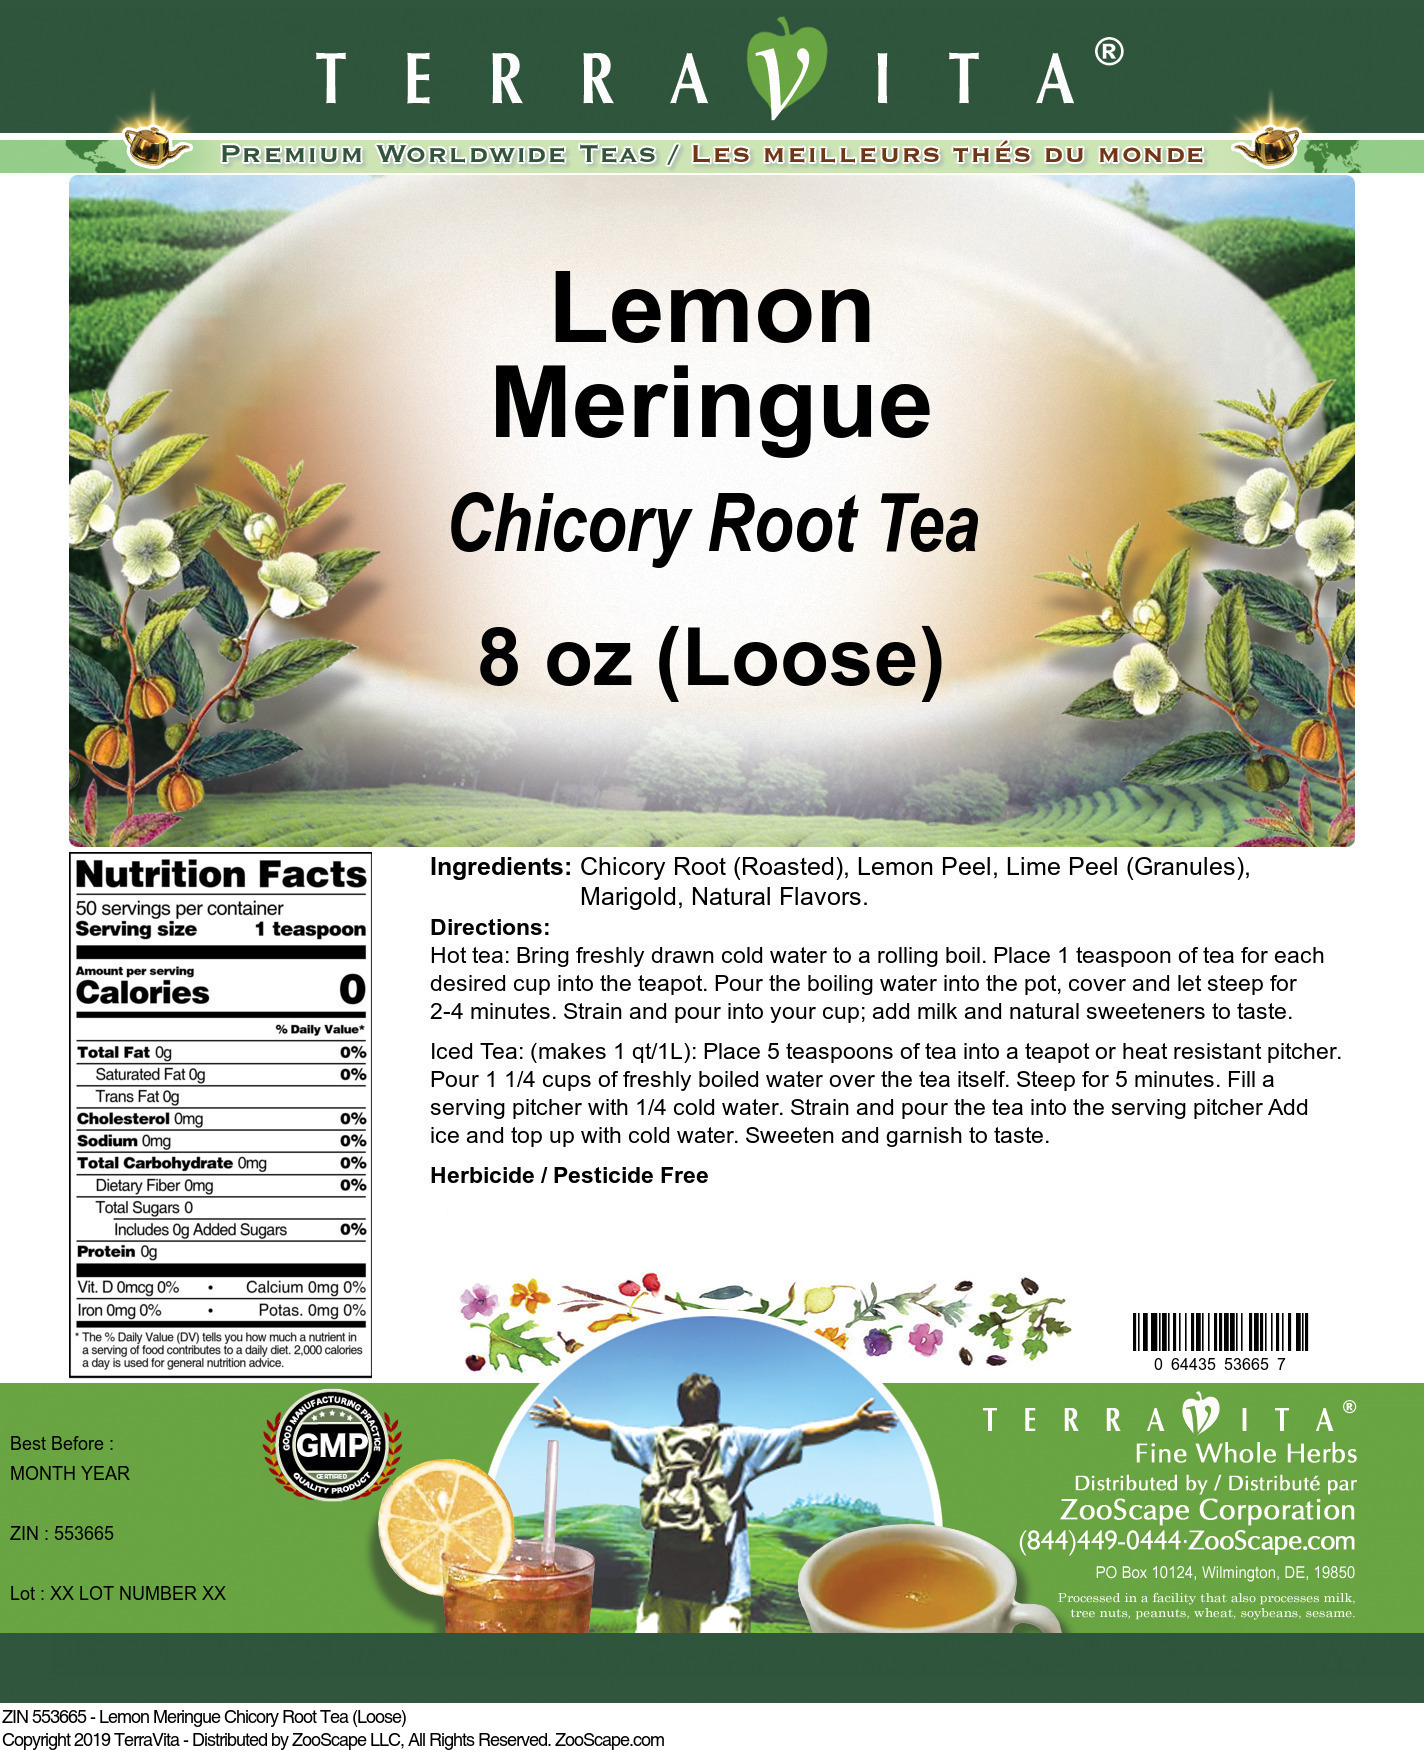 Lemon Meringue Chicory Root Tea (Loose) - Label